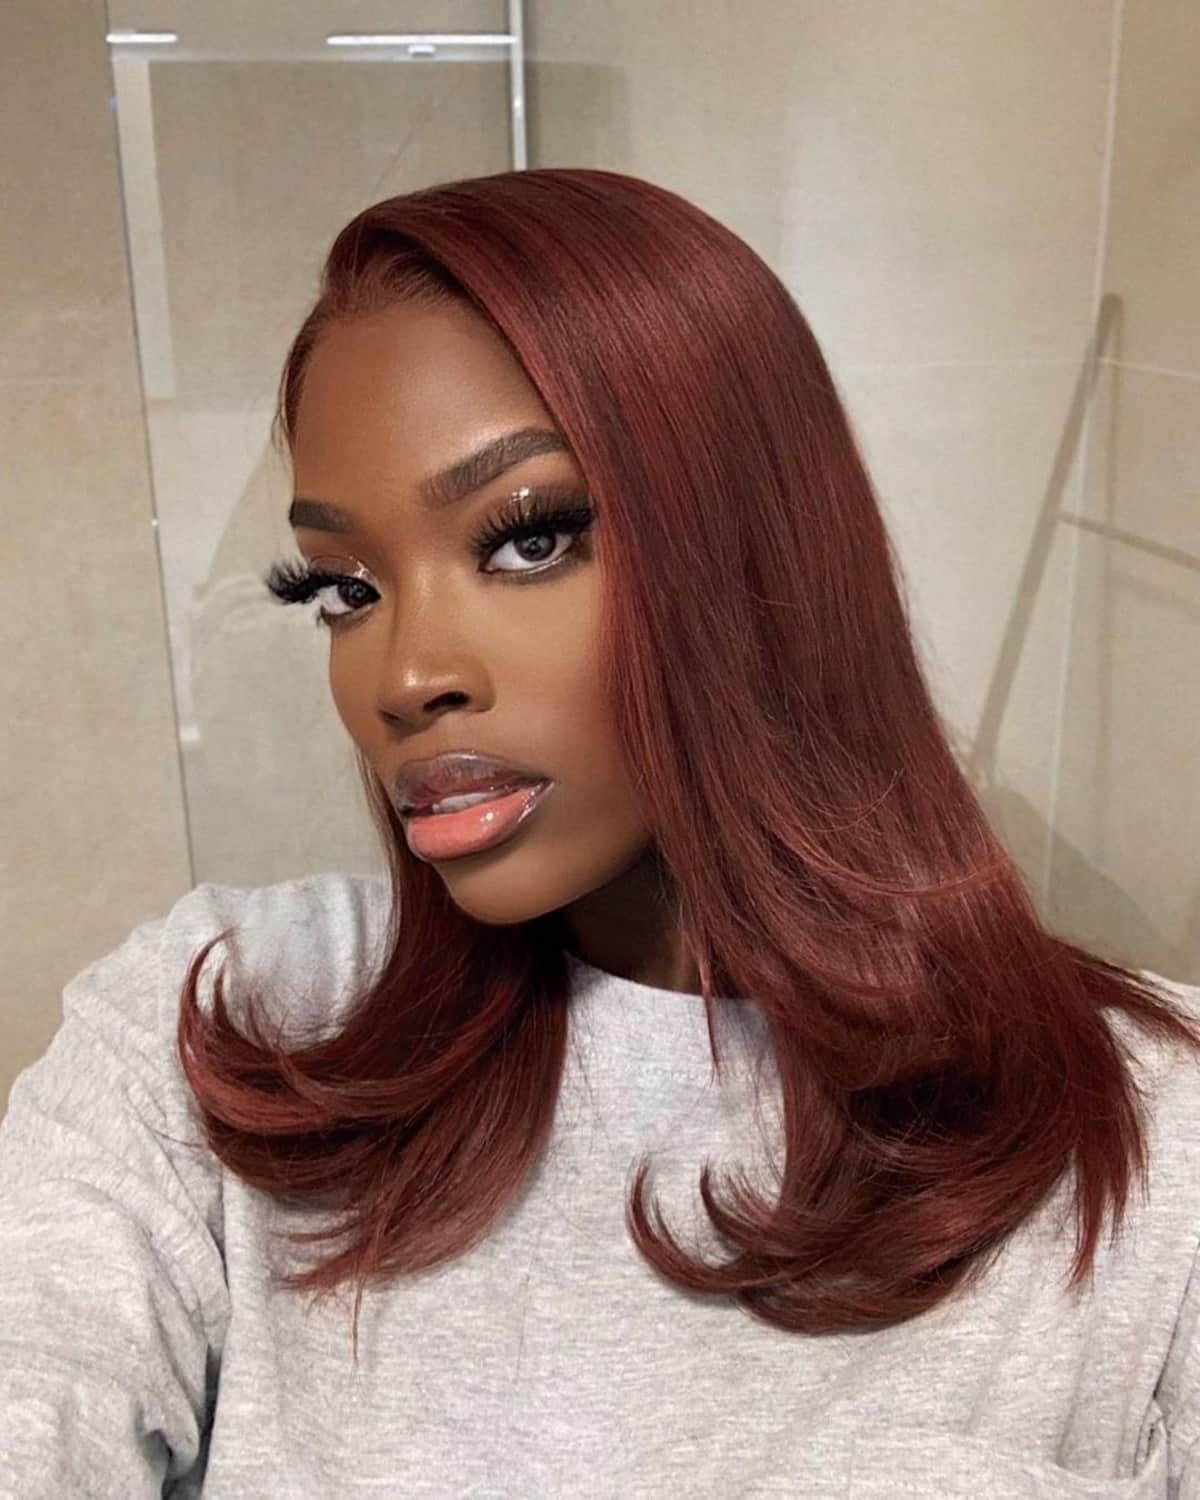 Auburn hair color on African-American women